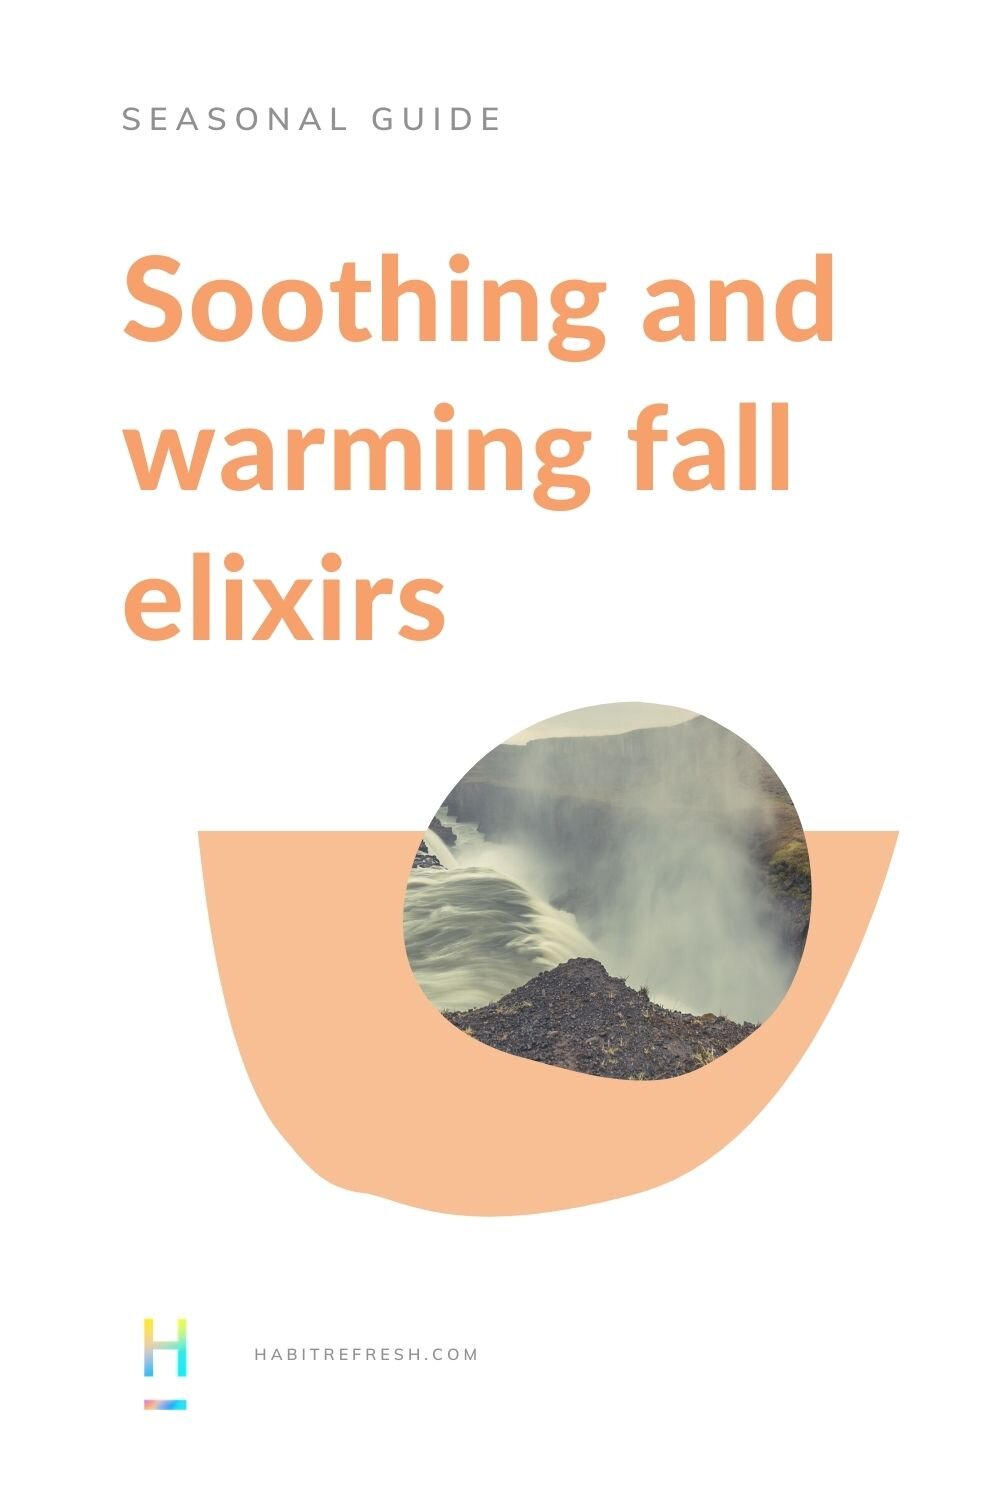 Fall elixir recipes (Copy)